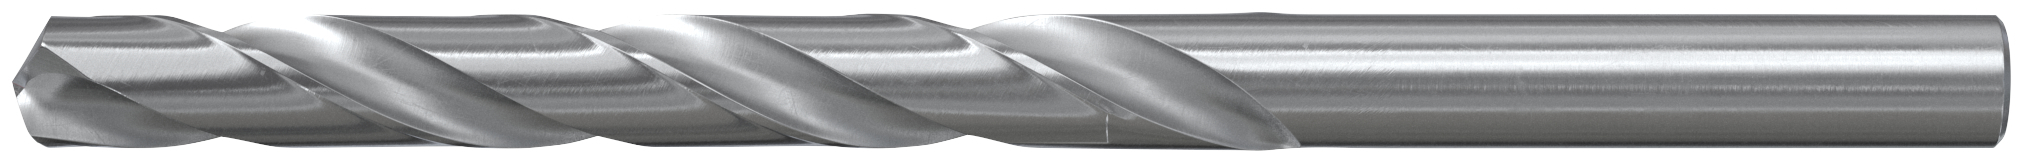 fischer Set di 19 punte trapano per metallo HSS-G (1-10mm) in acciaio (19 Pz.) Set di punte professionaliper metallo in acciaio HSS-G.